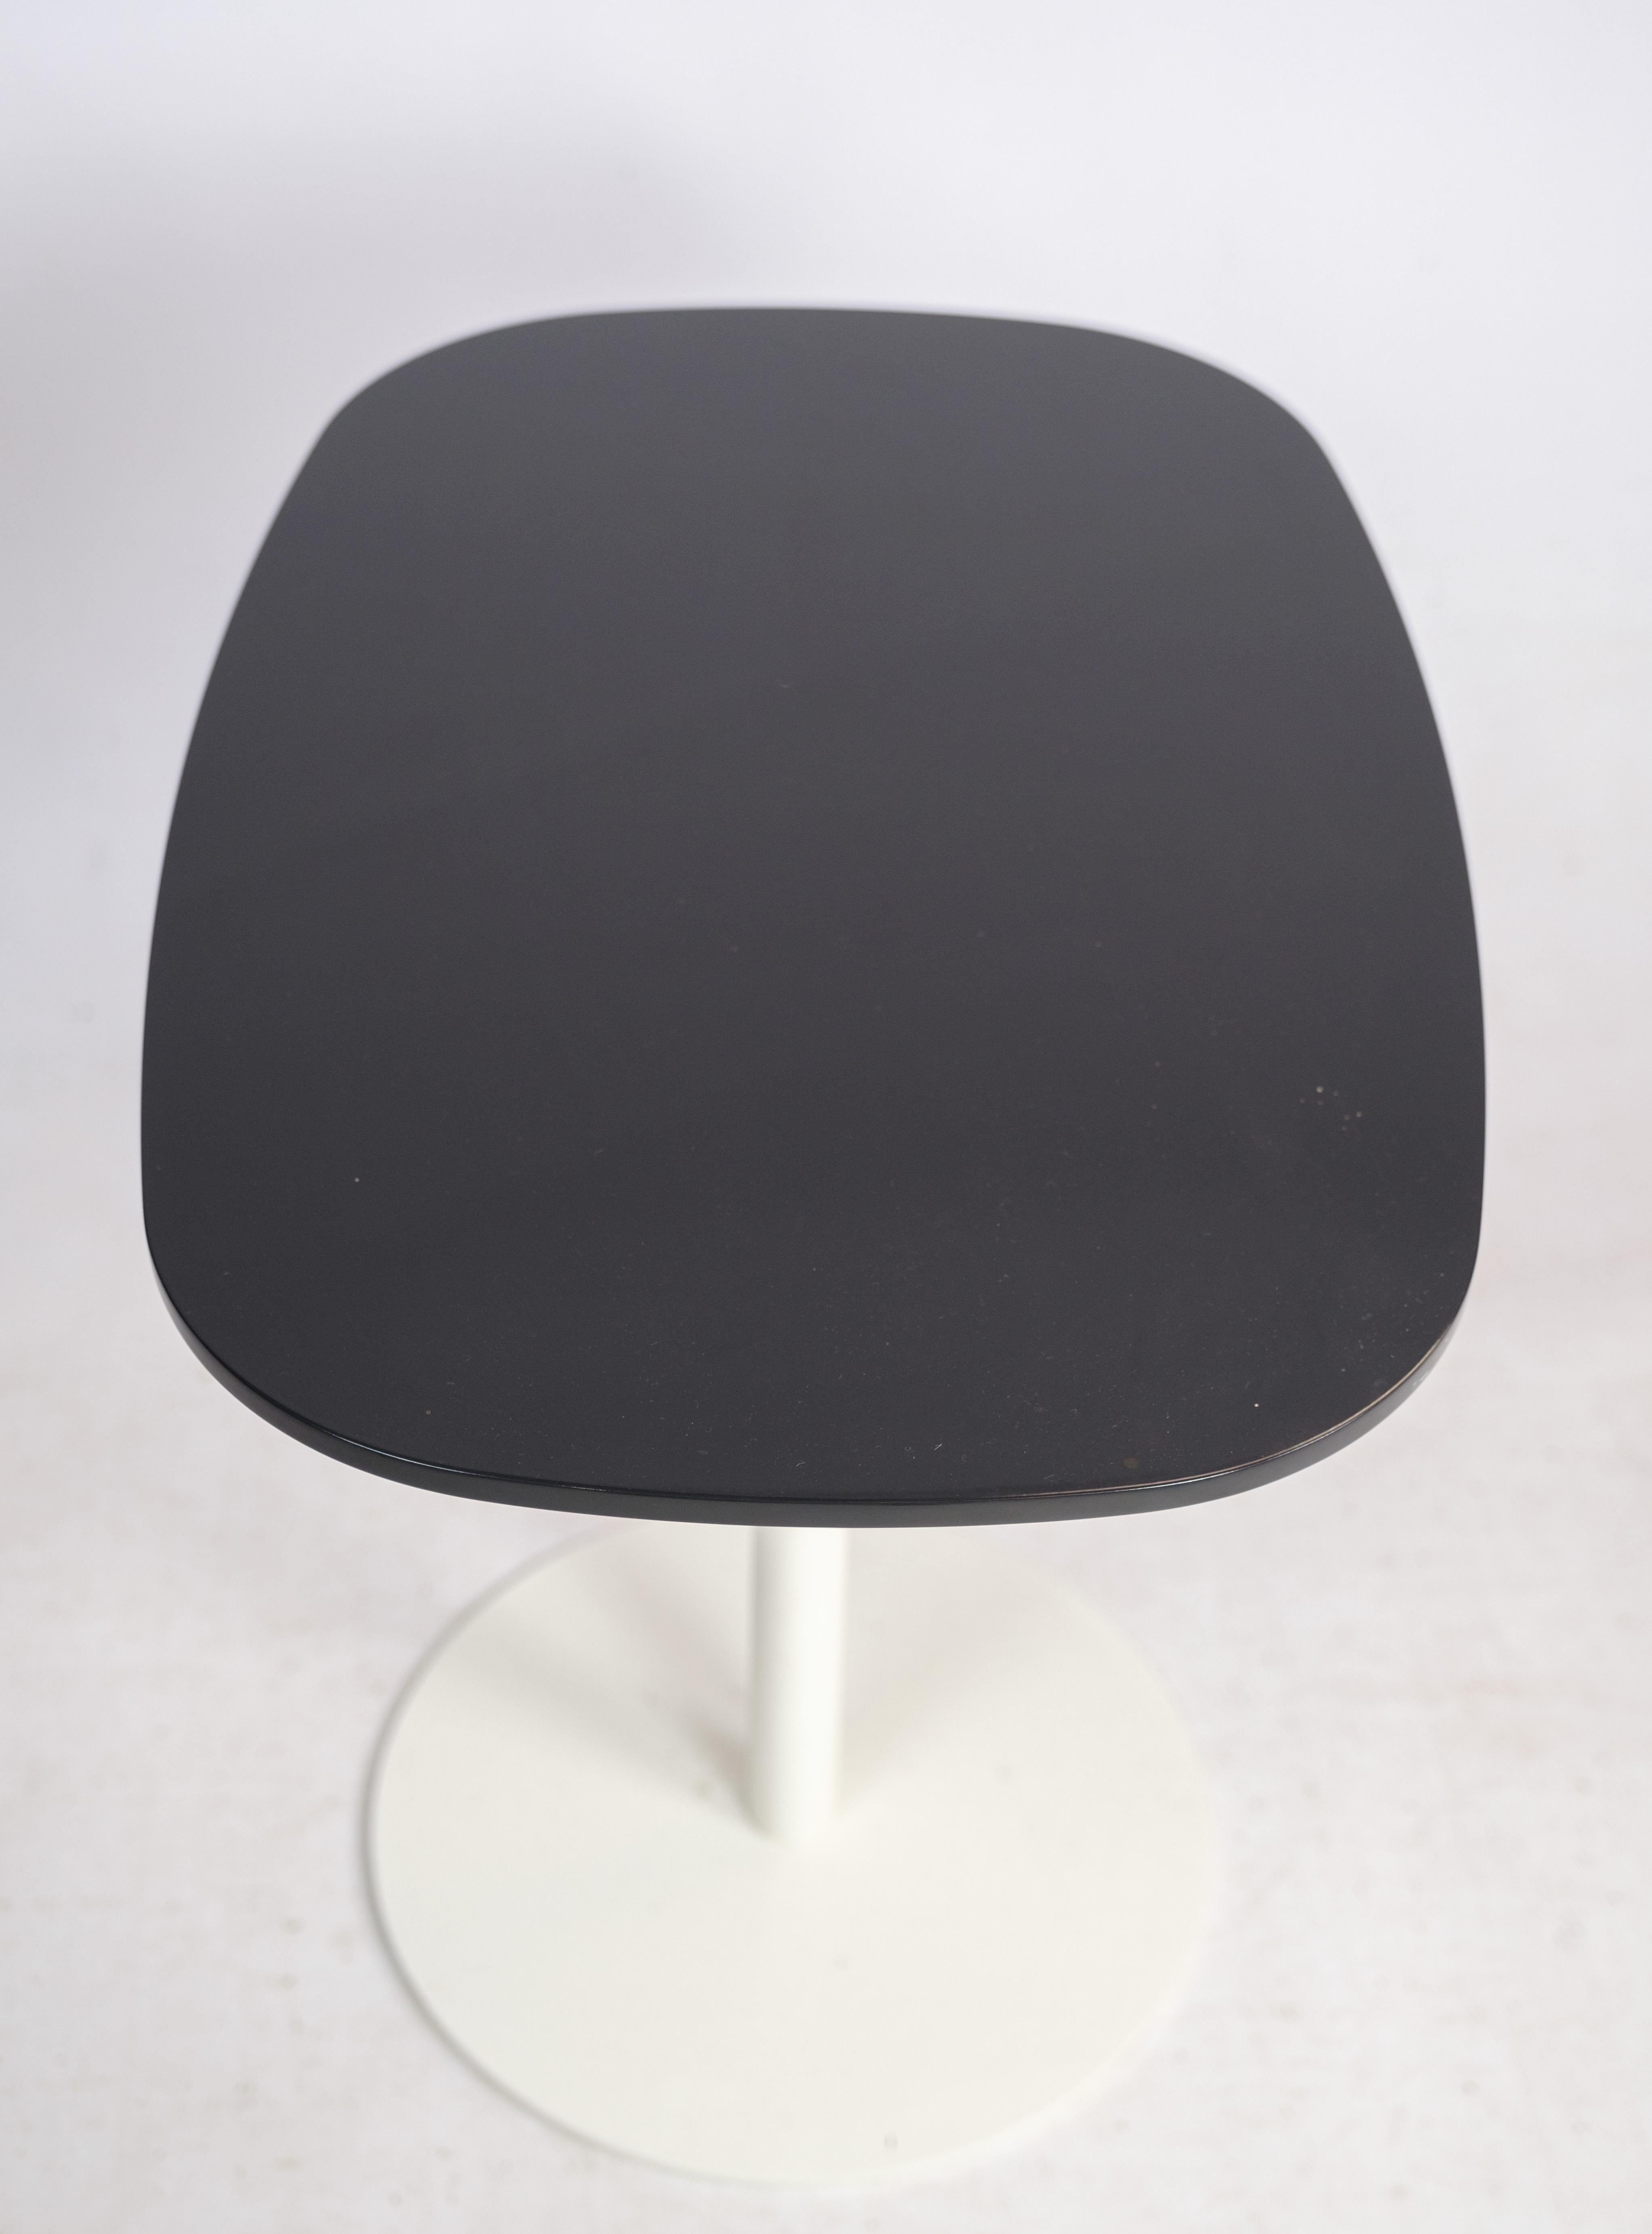 Coffee Table, Piero Lissoni, Black High-Gloss Colour, Fritz Hansen, 2006 For Sale 1